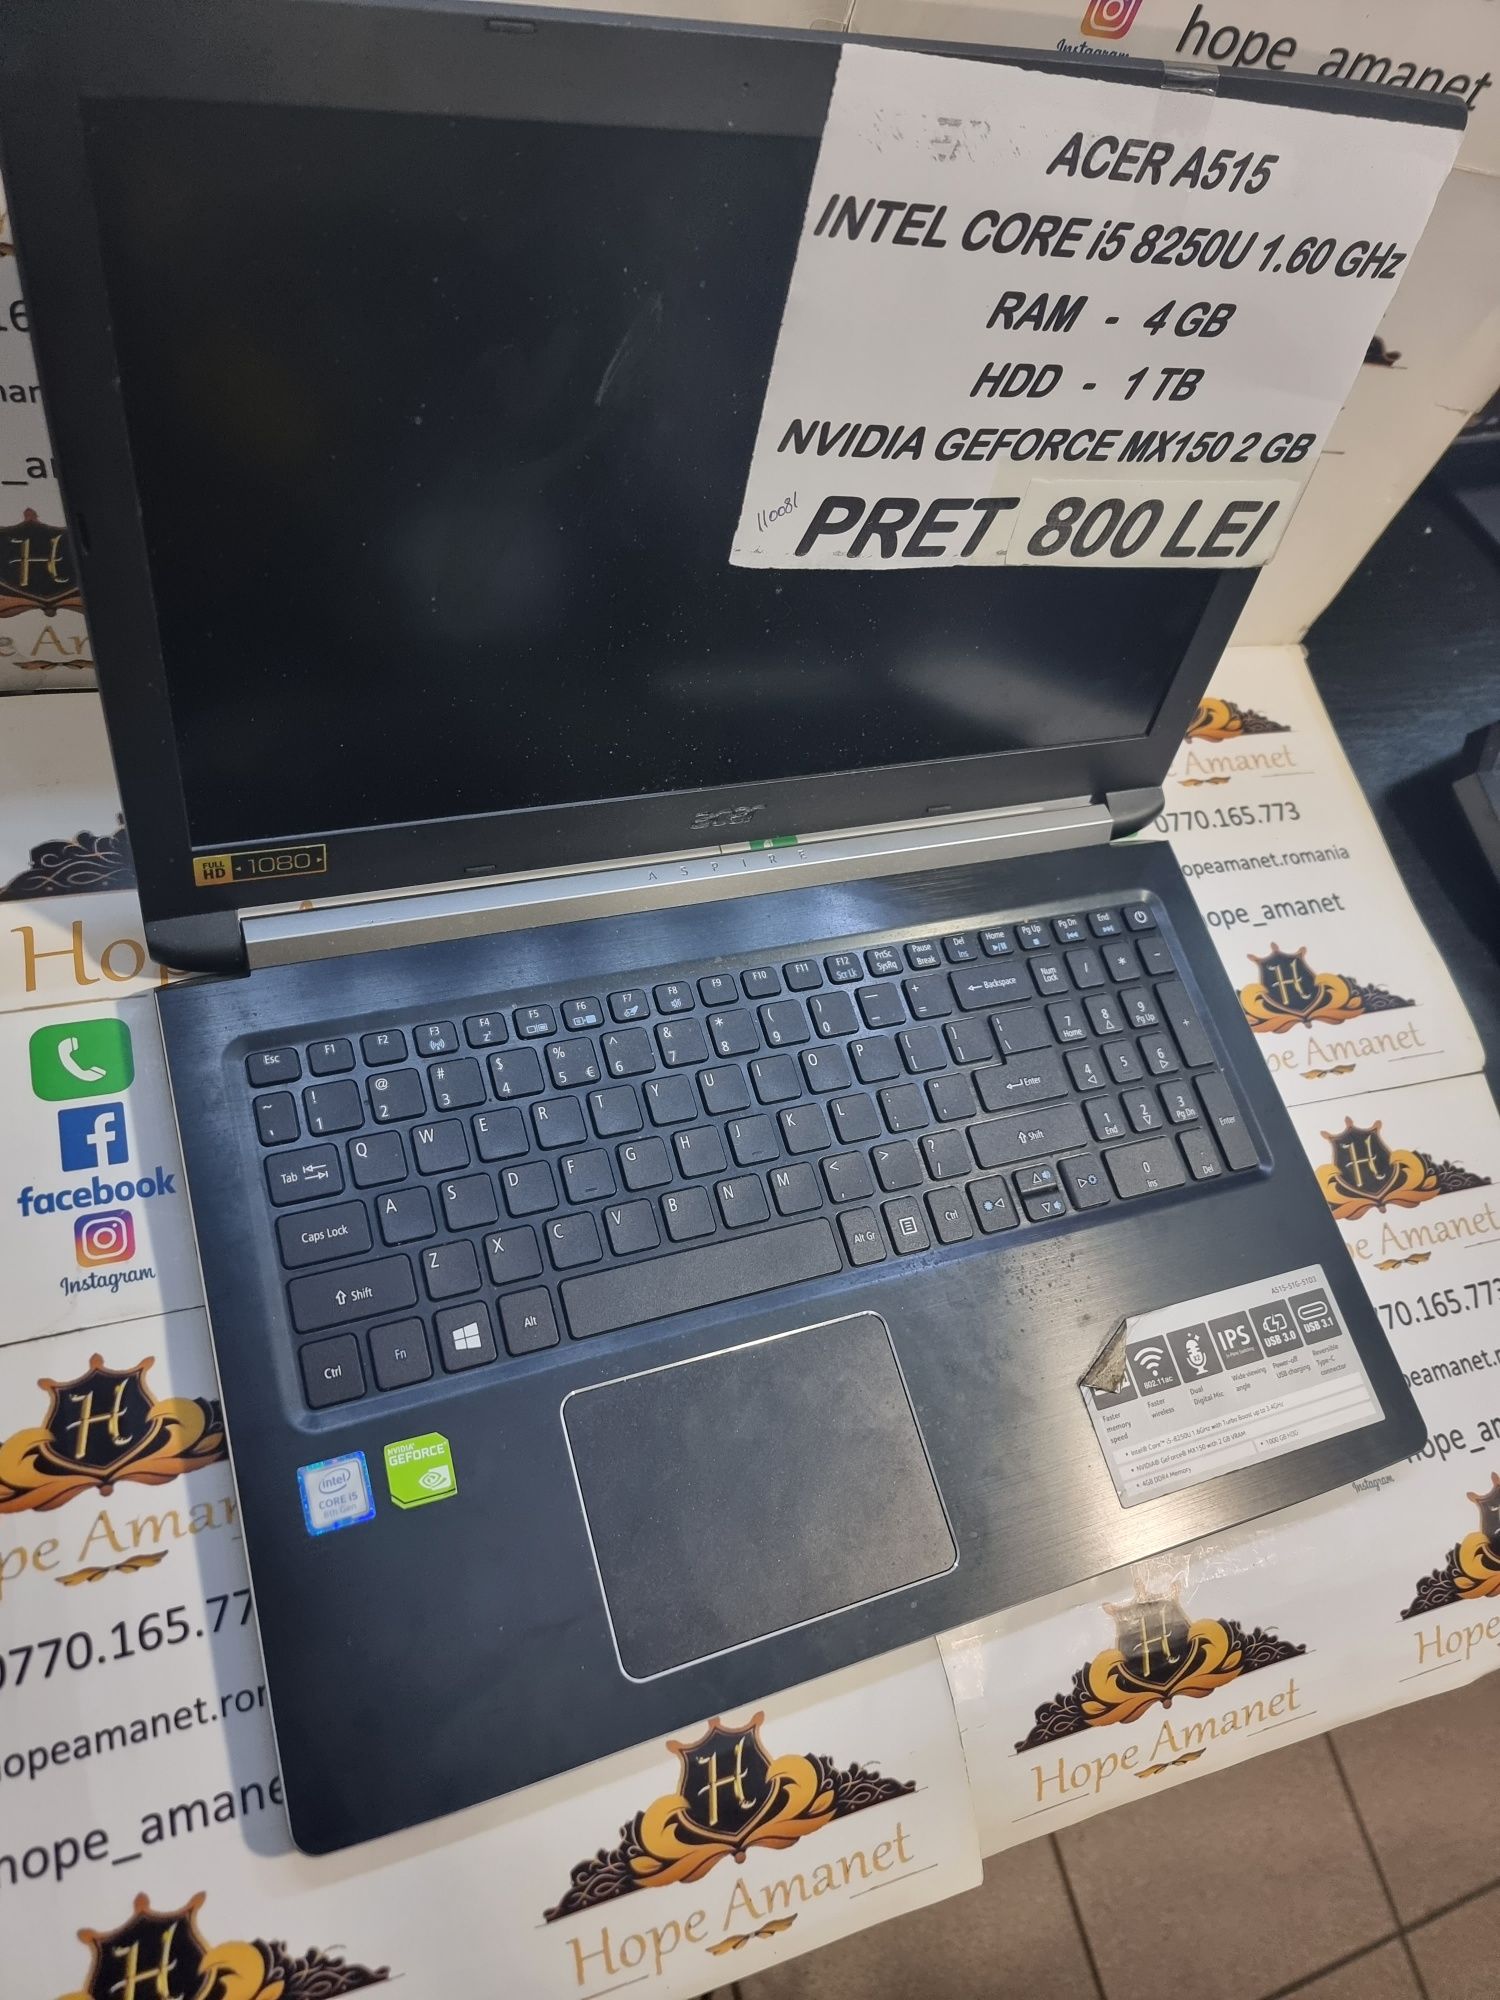 Hope Amanet P6 Laptop Acer A515 i5